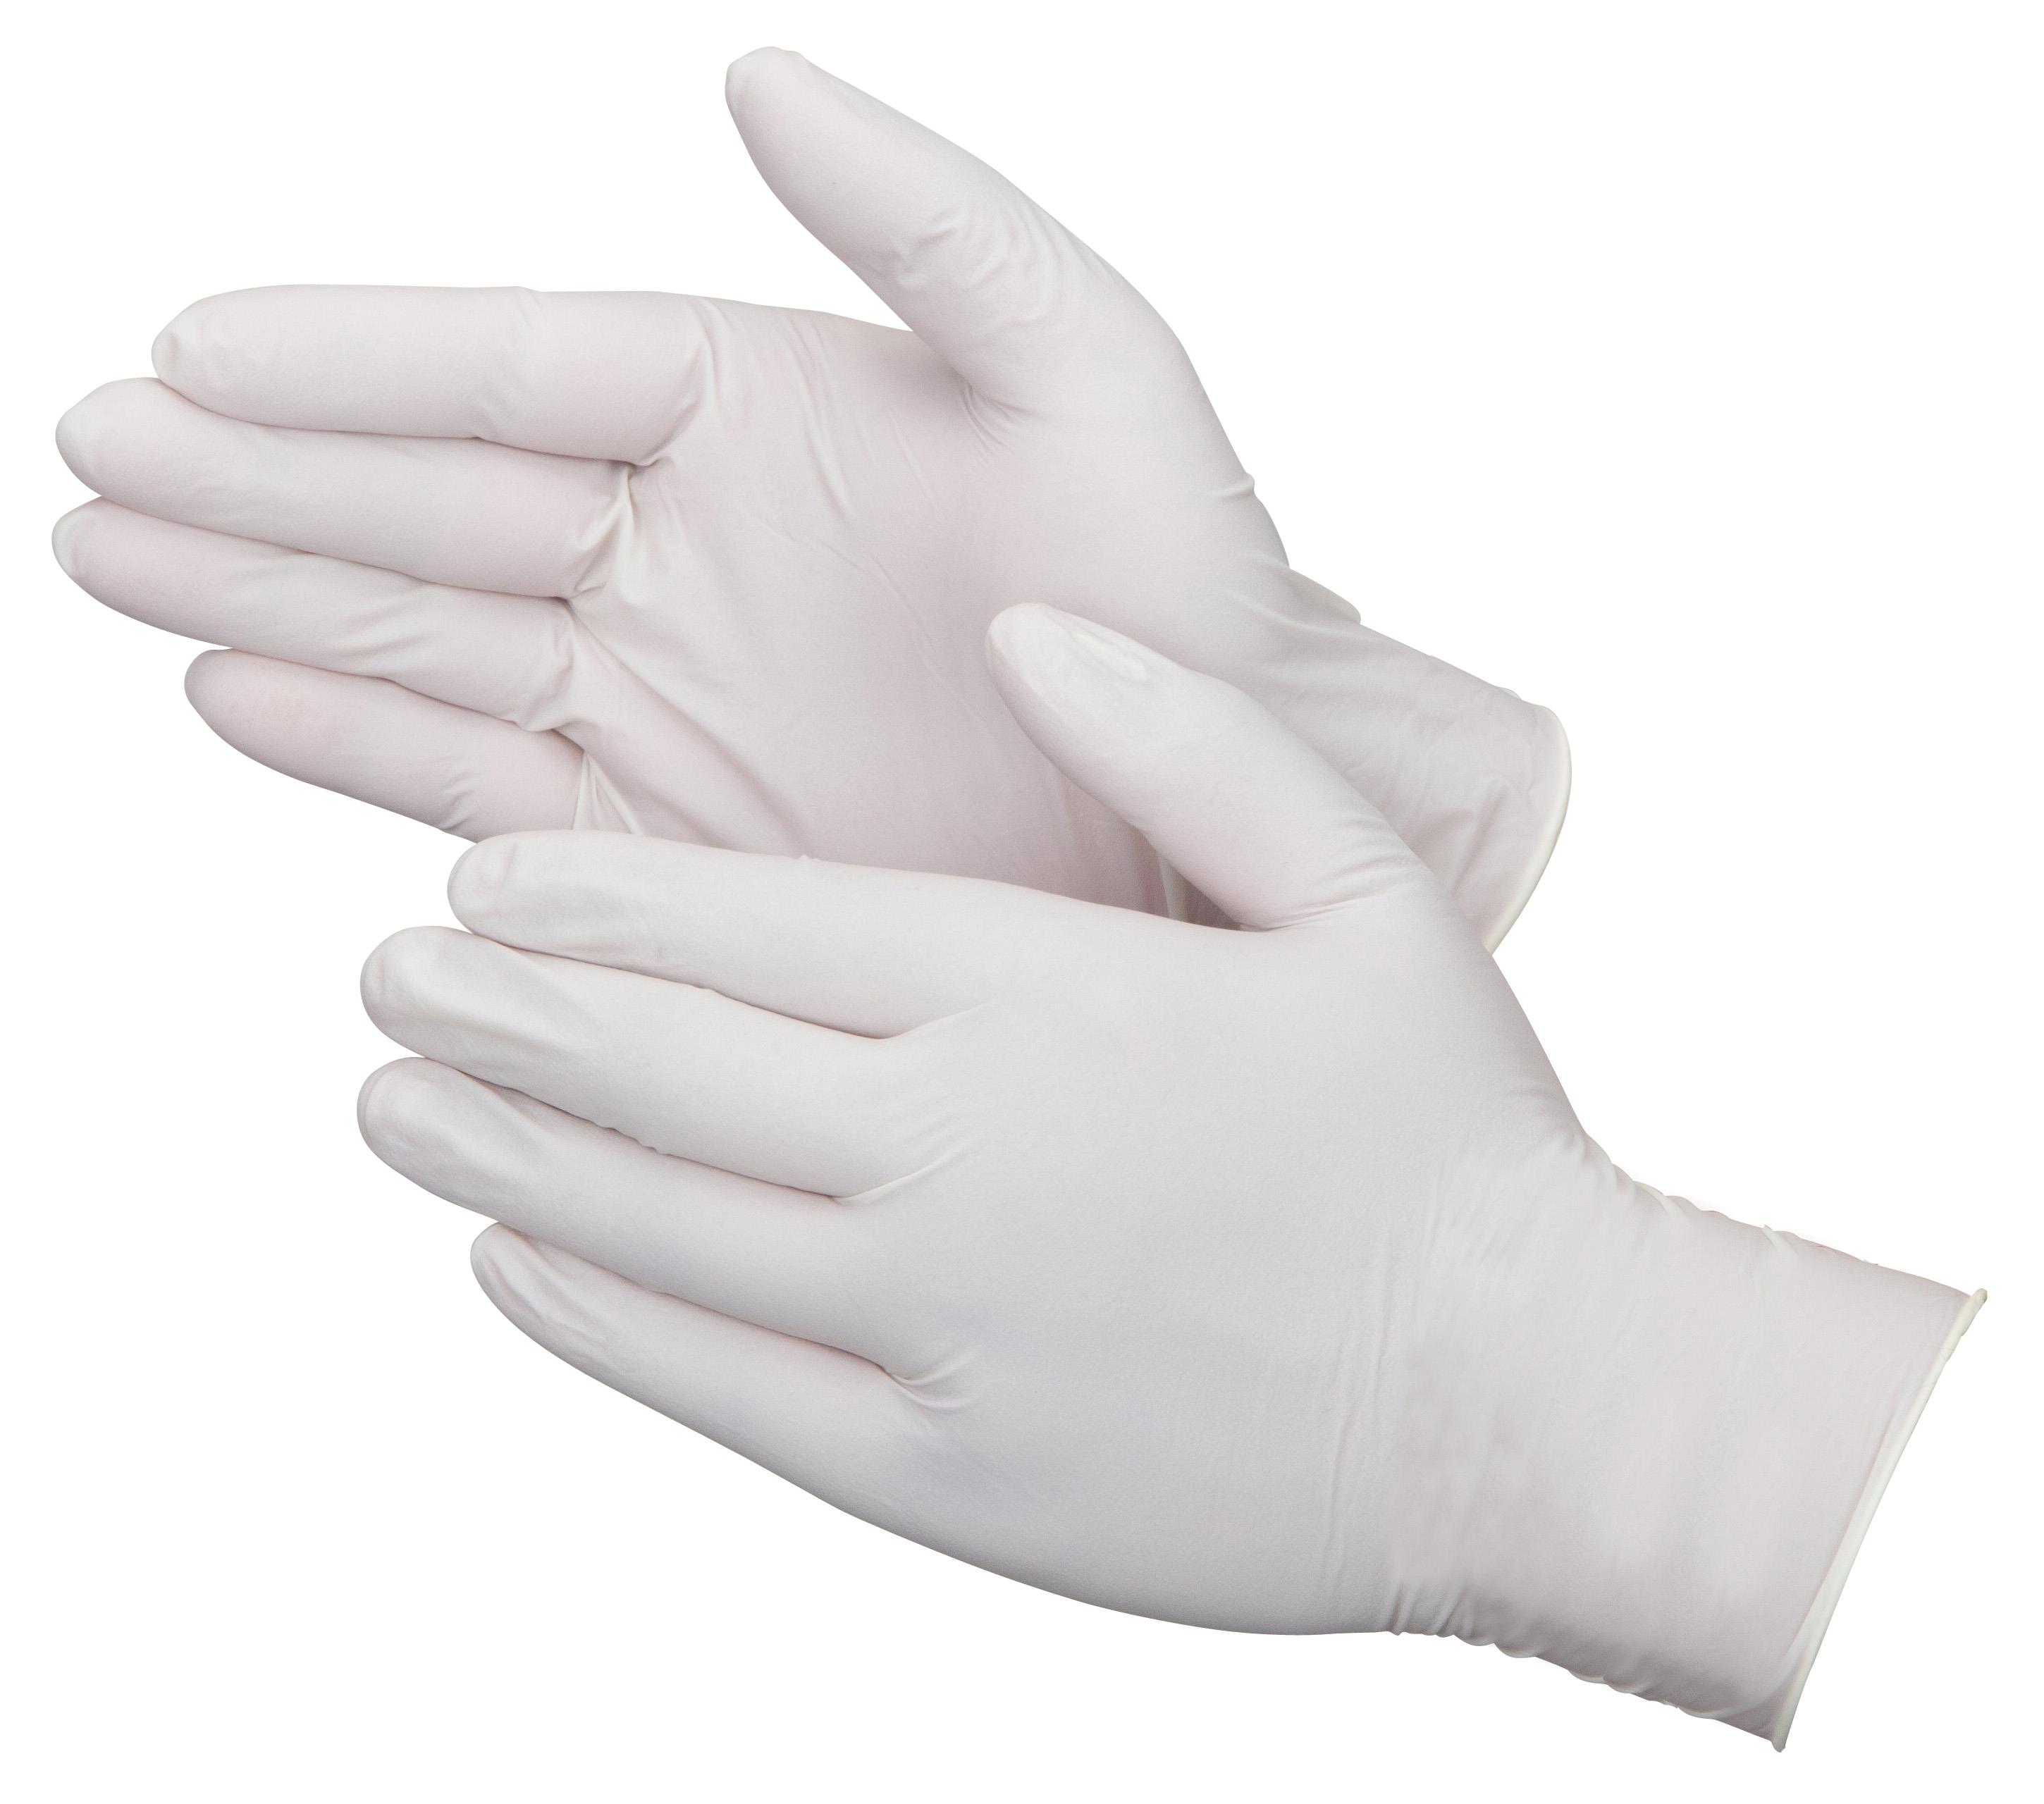 DURASKIN 3.5 MIL POWDERED LATEX 100/BX - Disposable Gloves